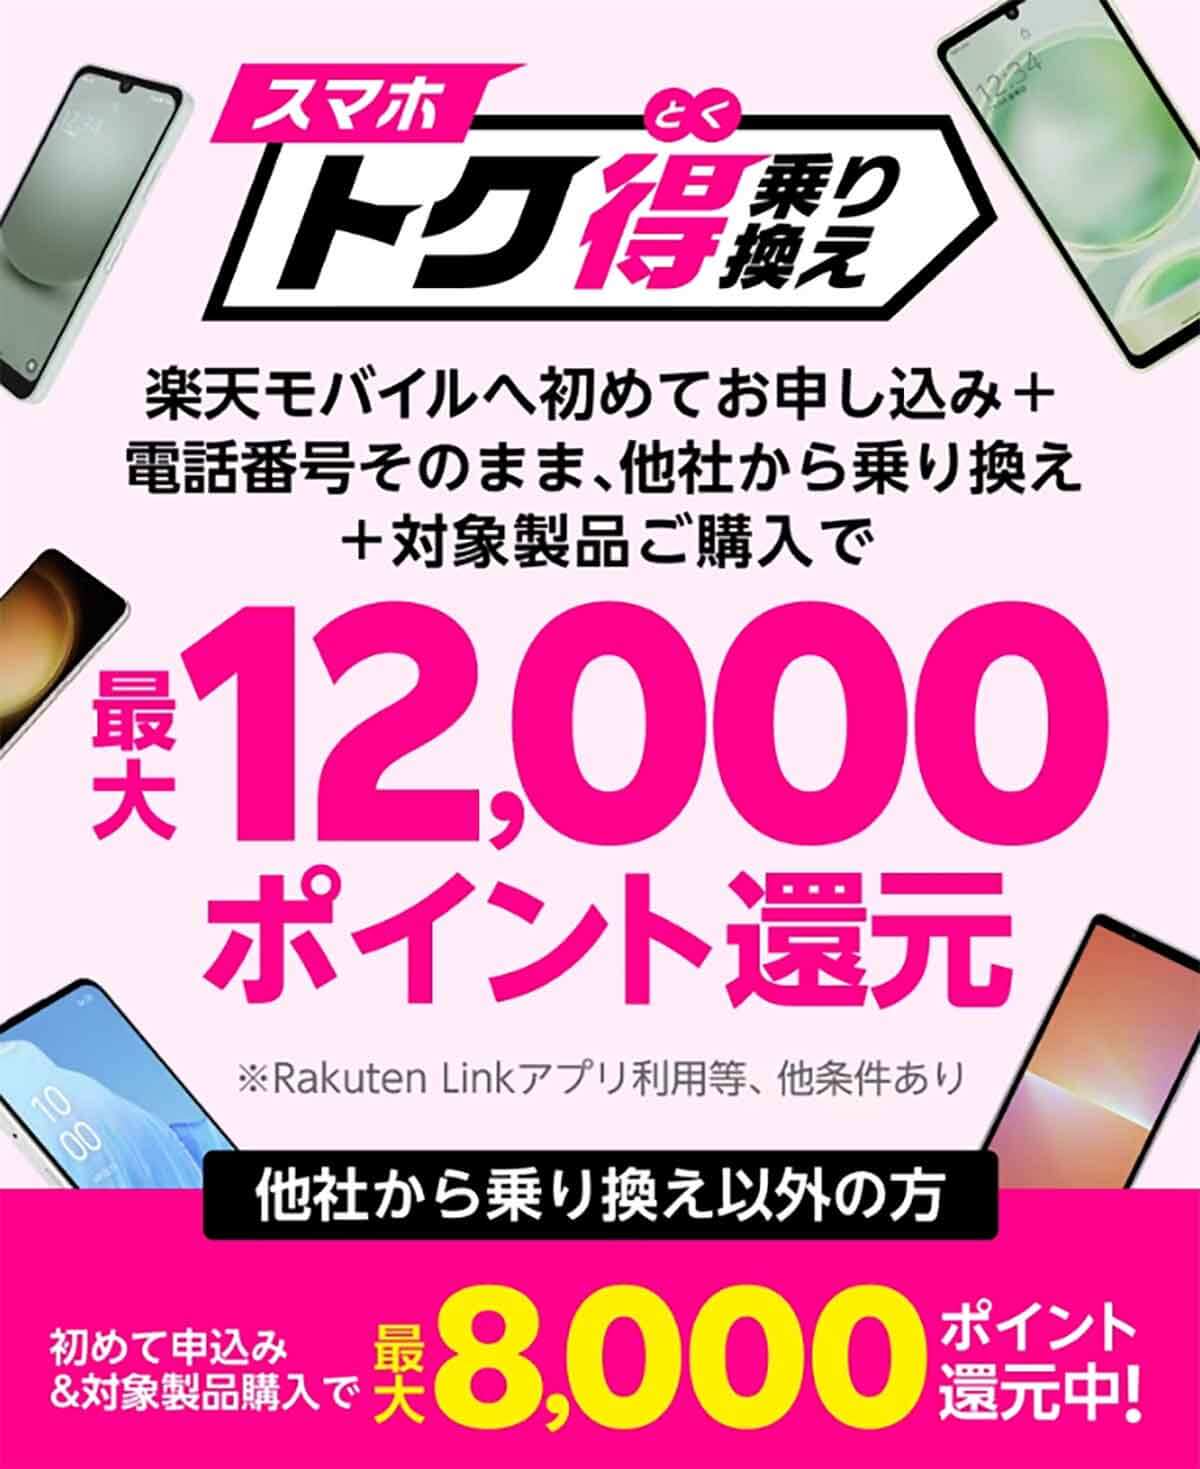 Rakuten最強プラン申し込み時にAndroidスマホを購入しても最大1万2,000ポイント還元